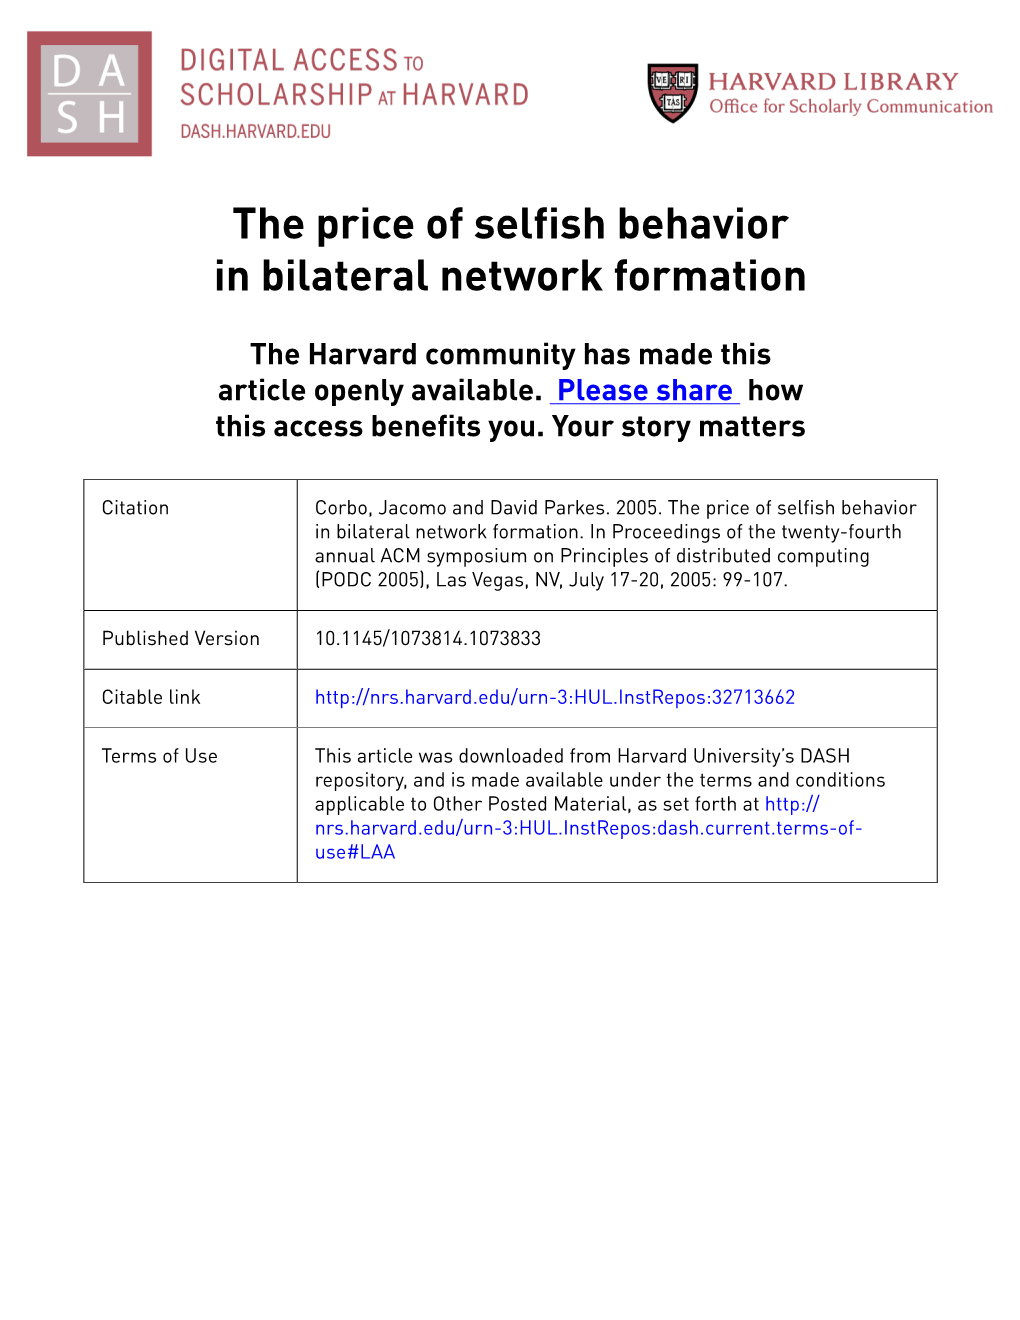 The Price of Selfish Behavior in Bilateral Network Formation